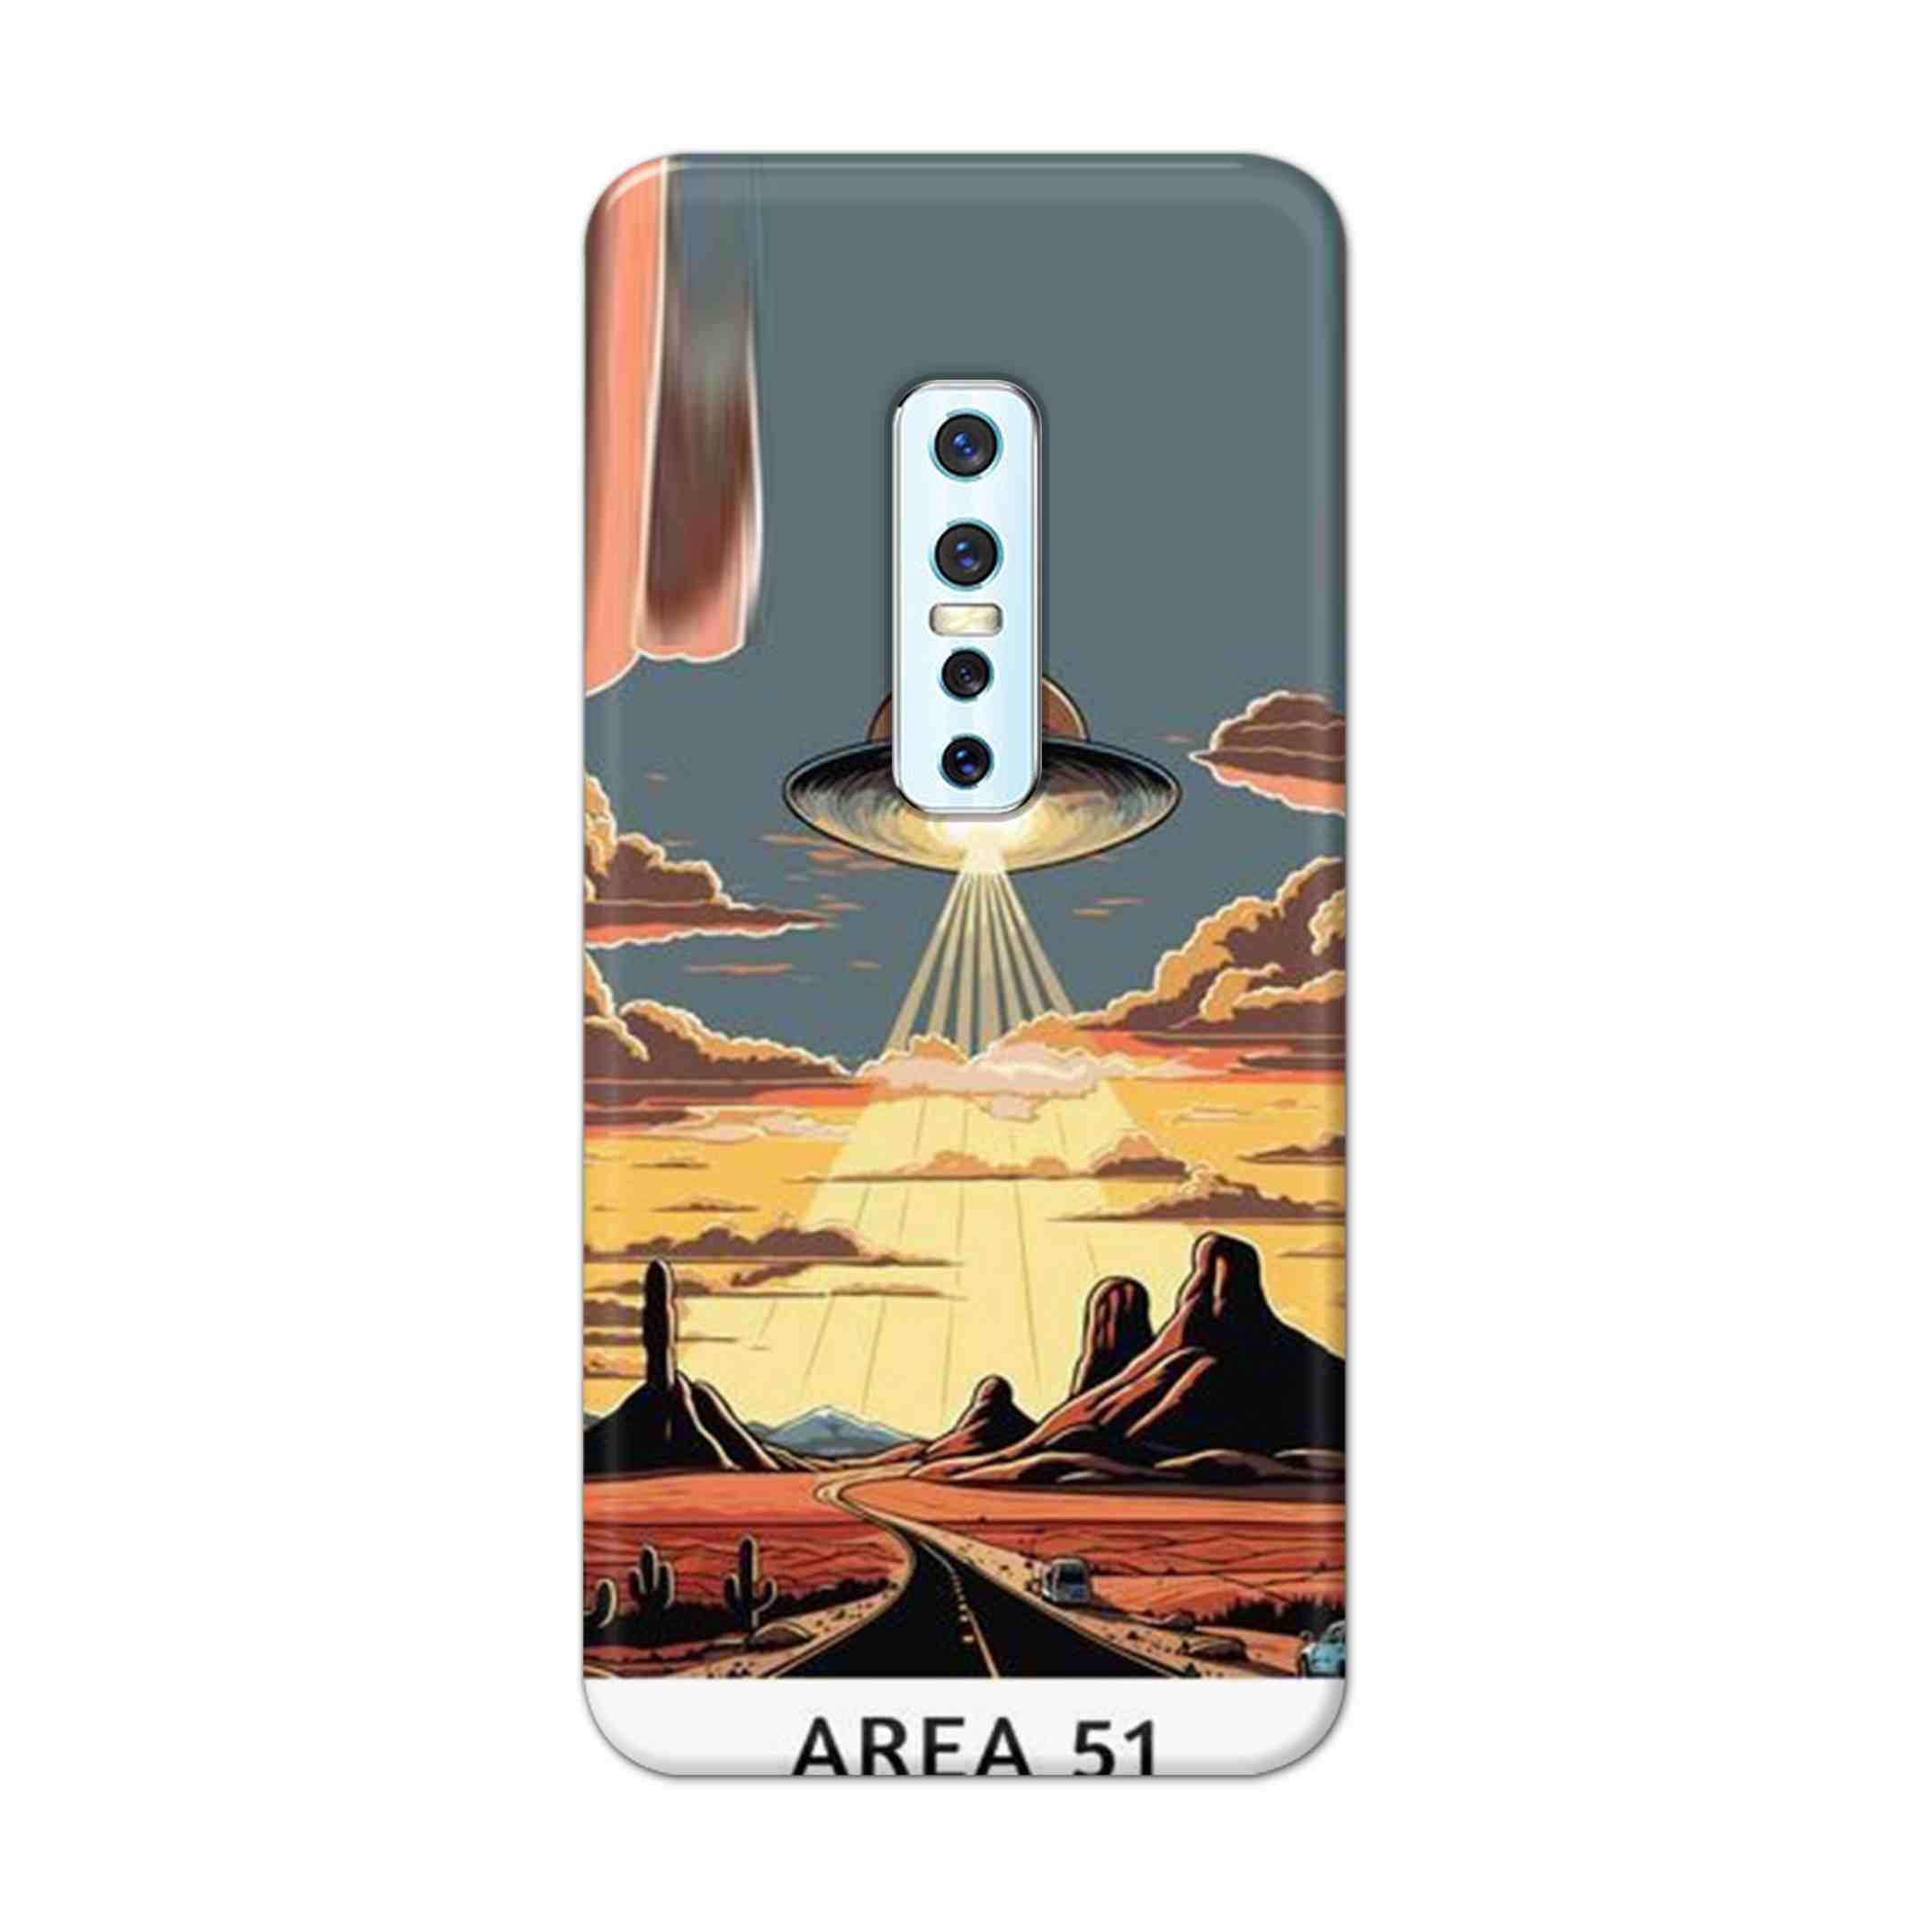 Buy Area 51 Hard Back Mobile Phone Case Cover For Vivo V17 Pro Online